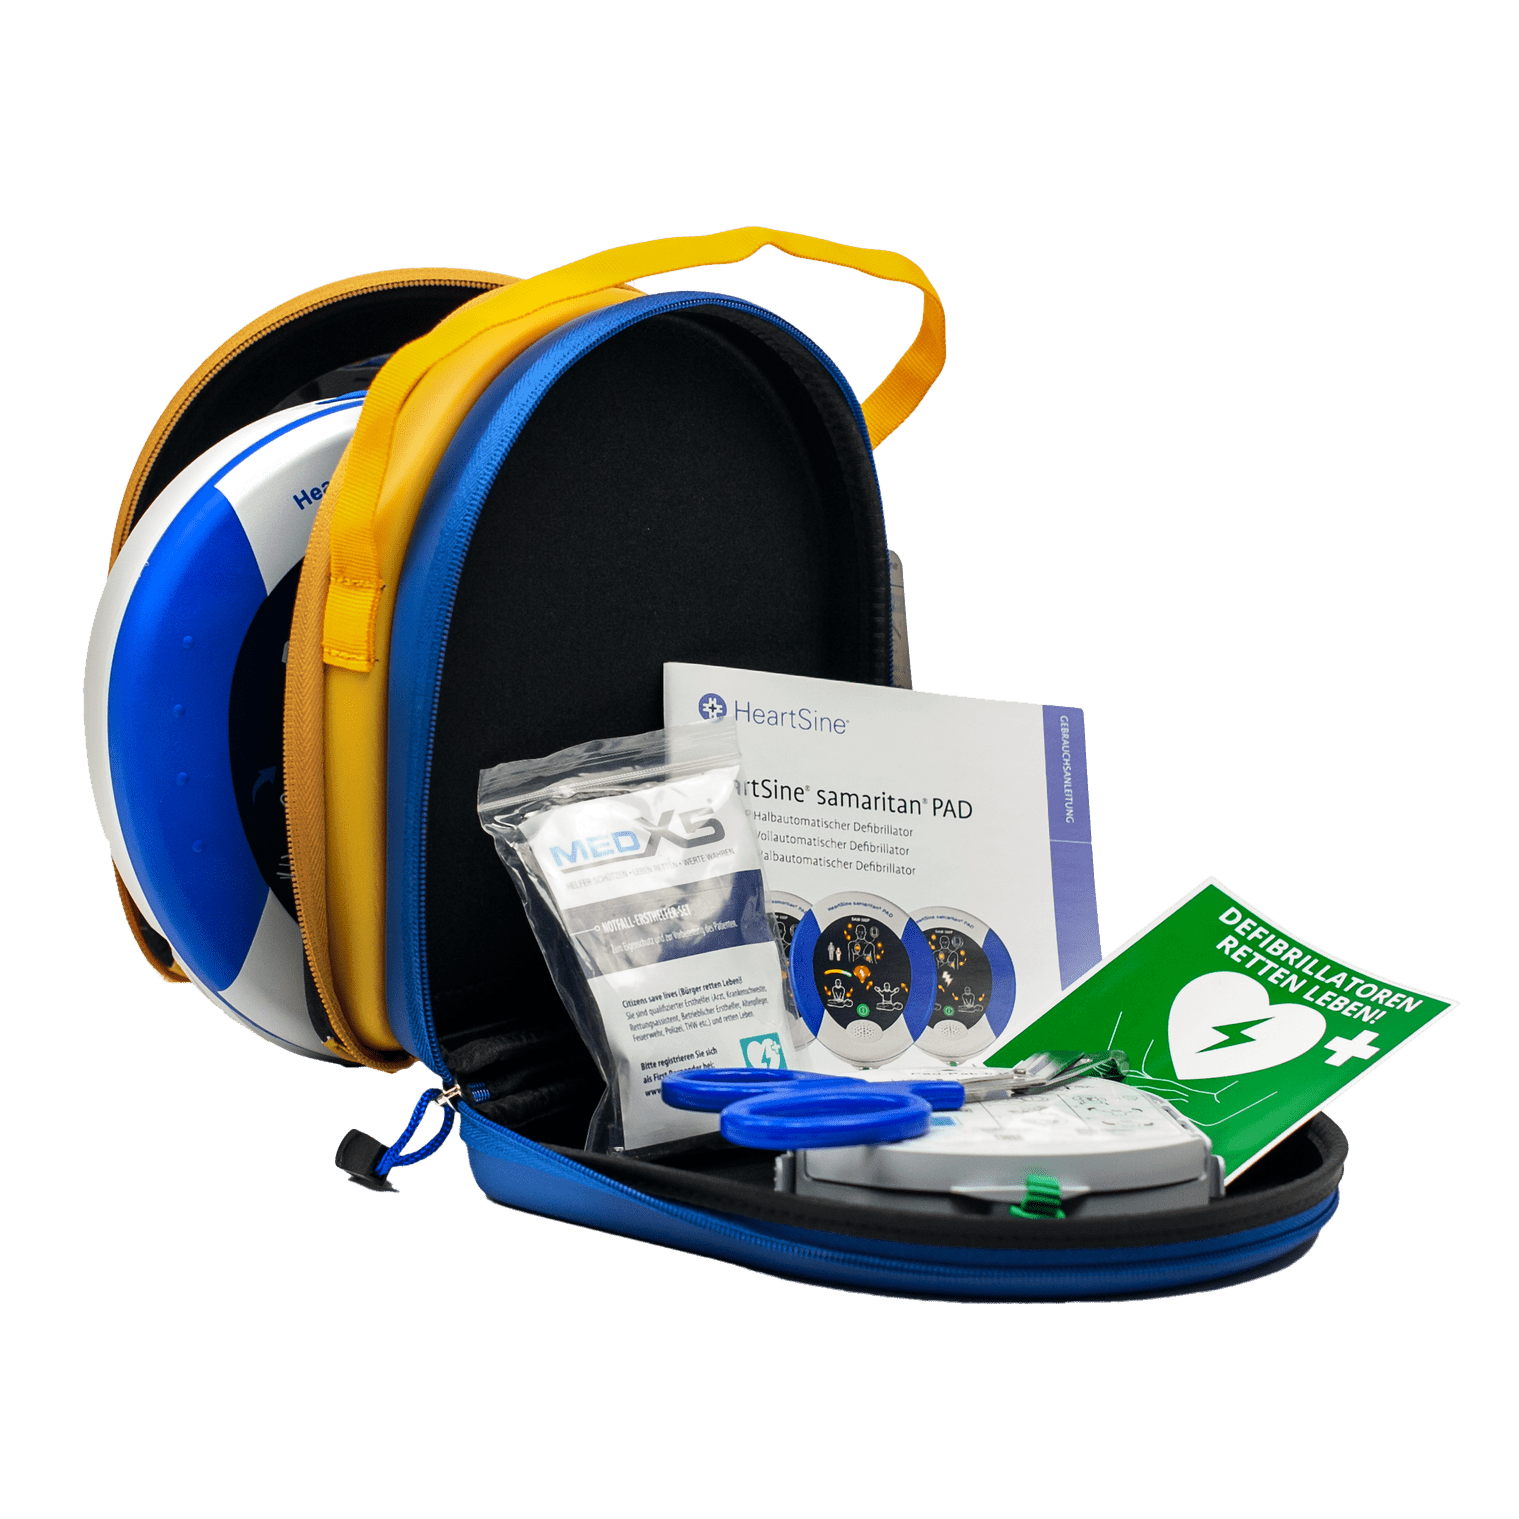 Defibrillator SAM 350P (HeartSine)